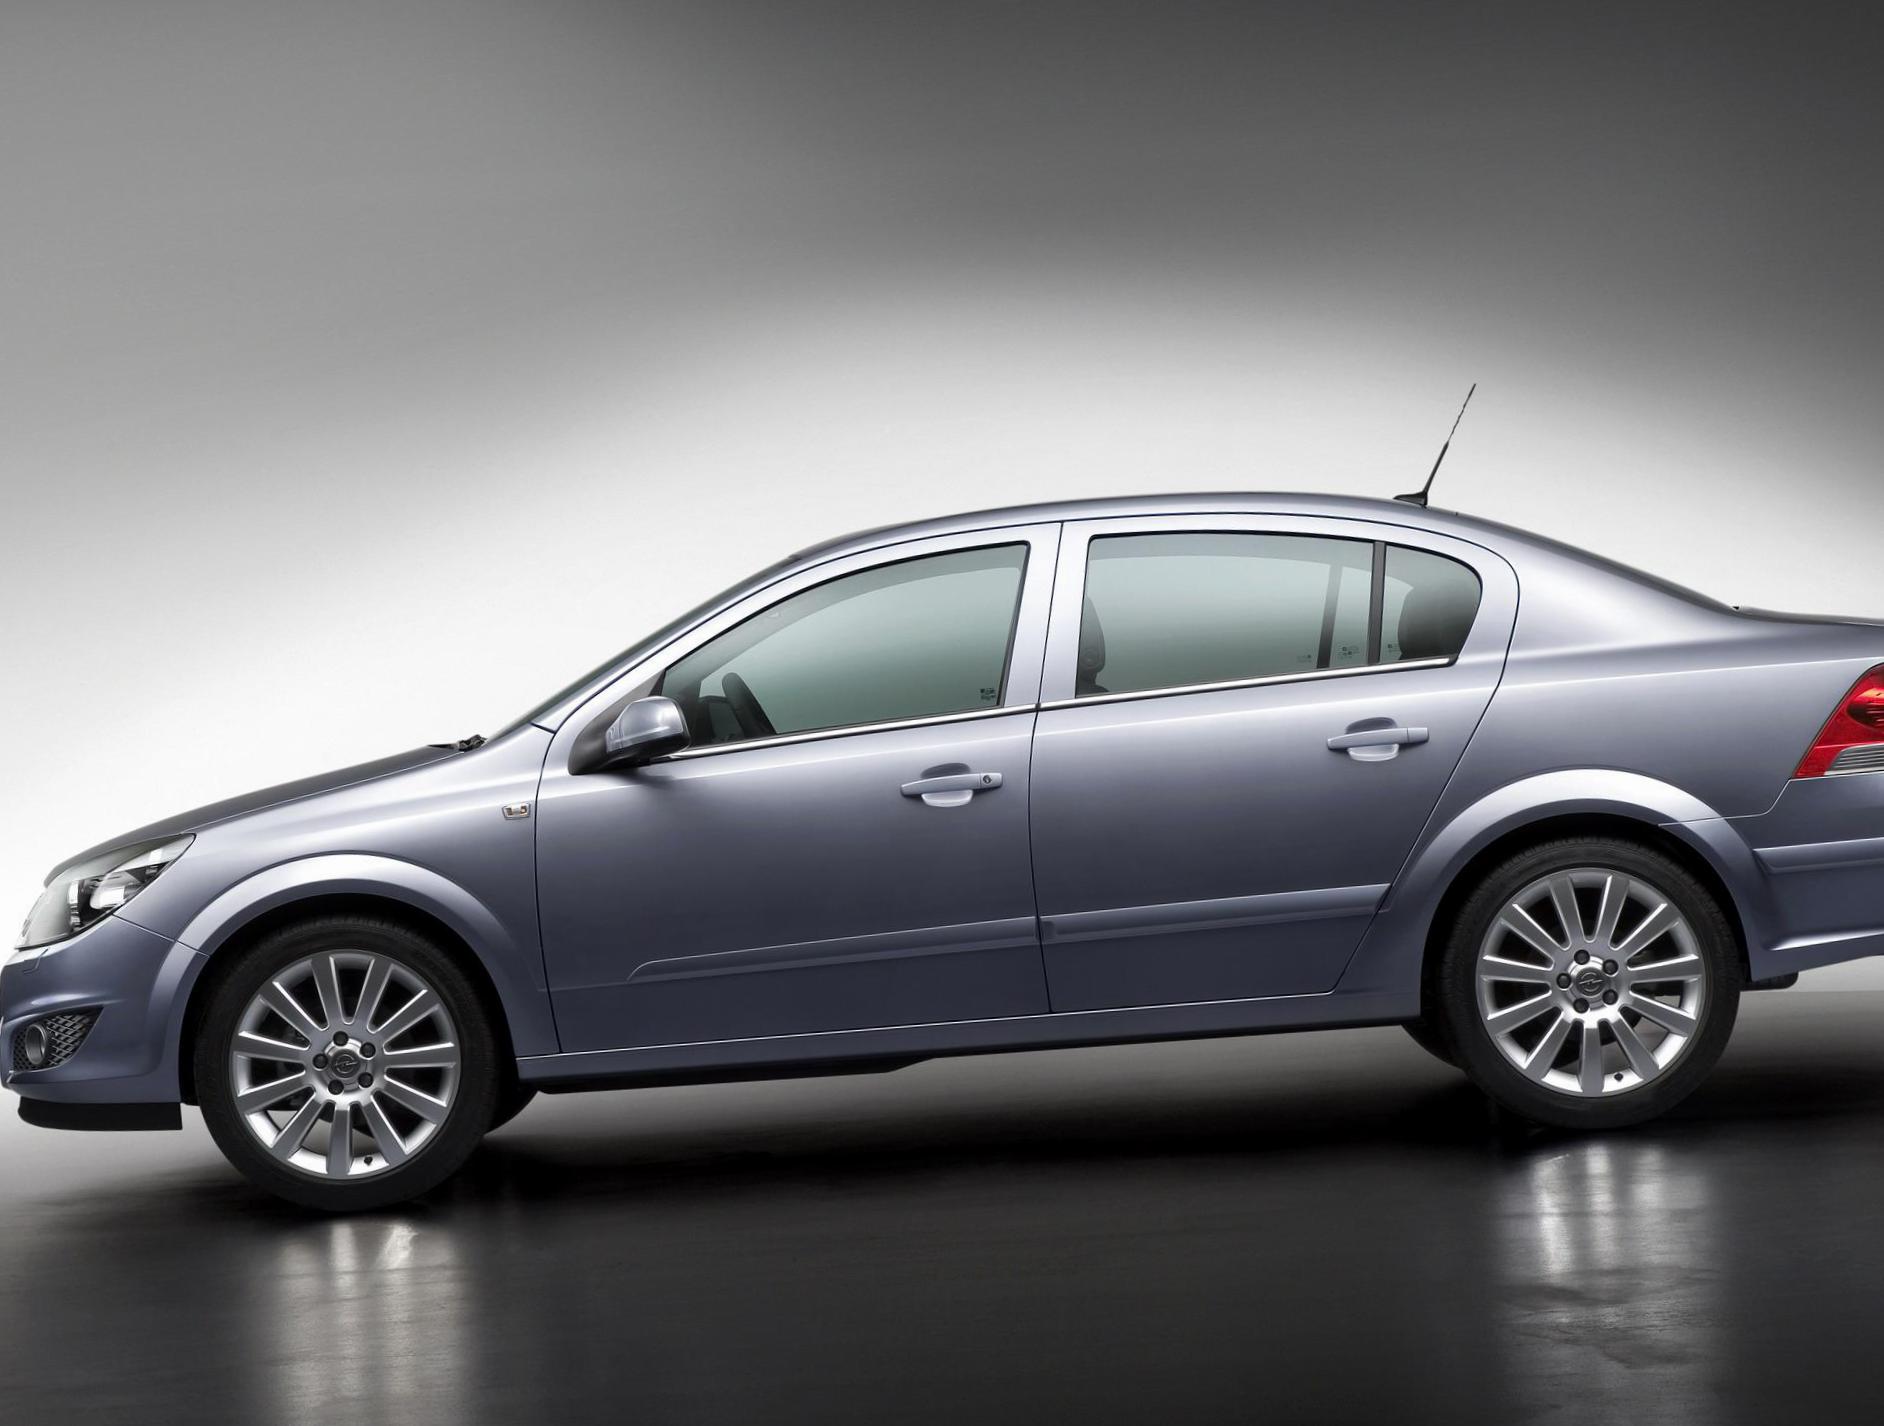 Opel Astra H Sedan prices 2015